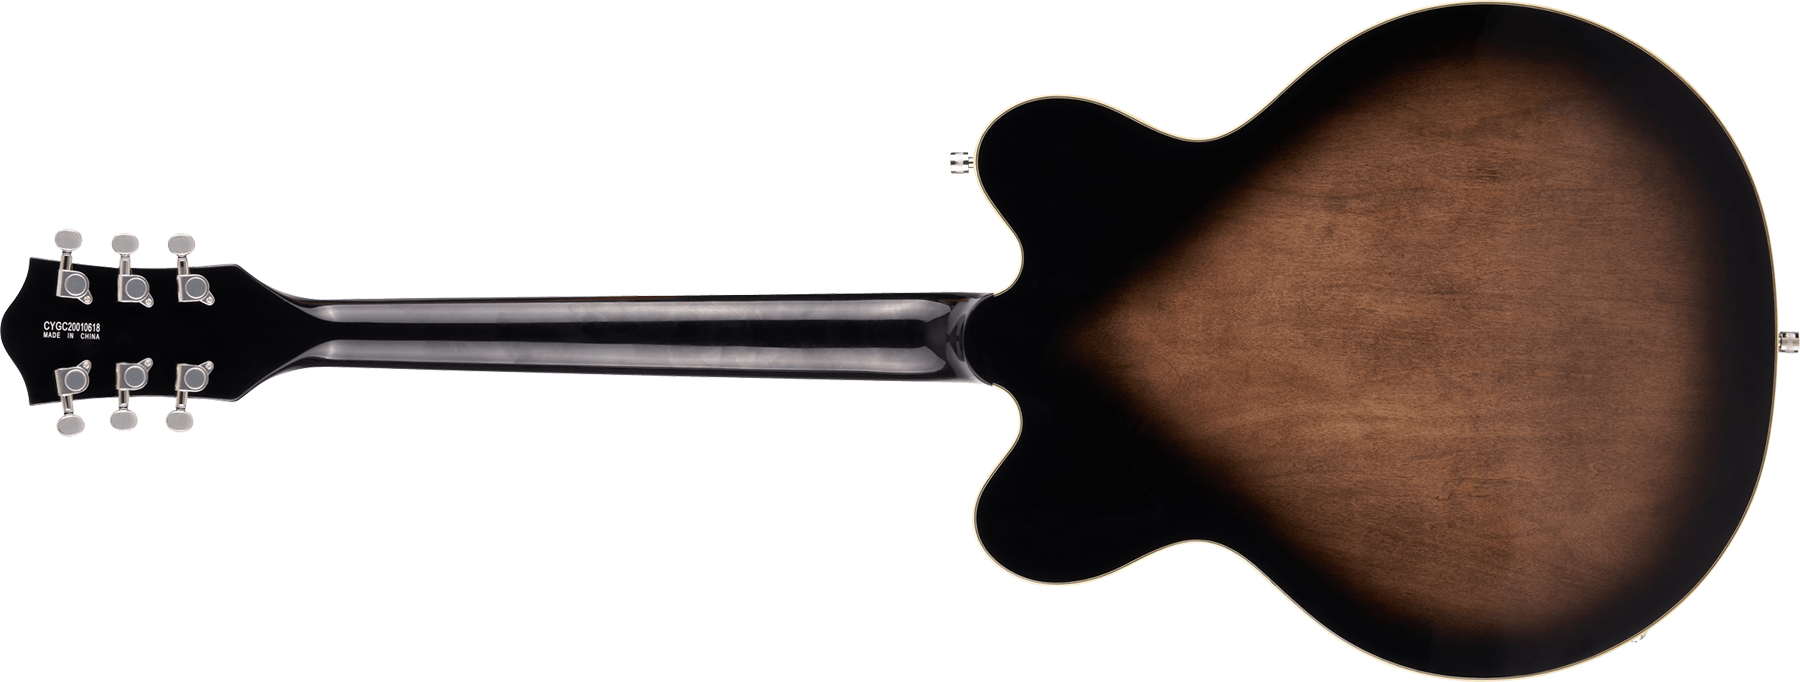 Gretsch G5622 Center Bloc Double Cut V-stoptail Electromatic Hh Ht Lau - Bristol Fog - Semi hollow elektriche gitaar - Variation 1